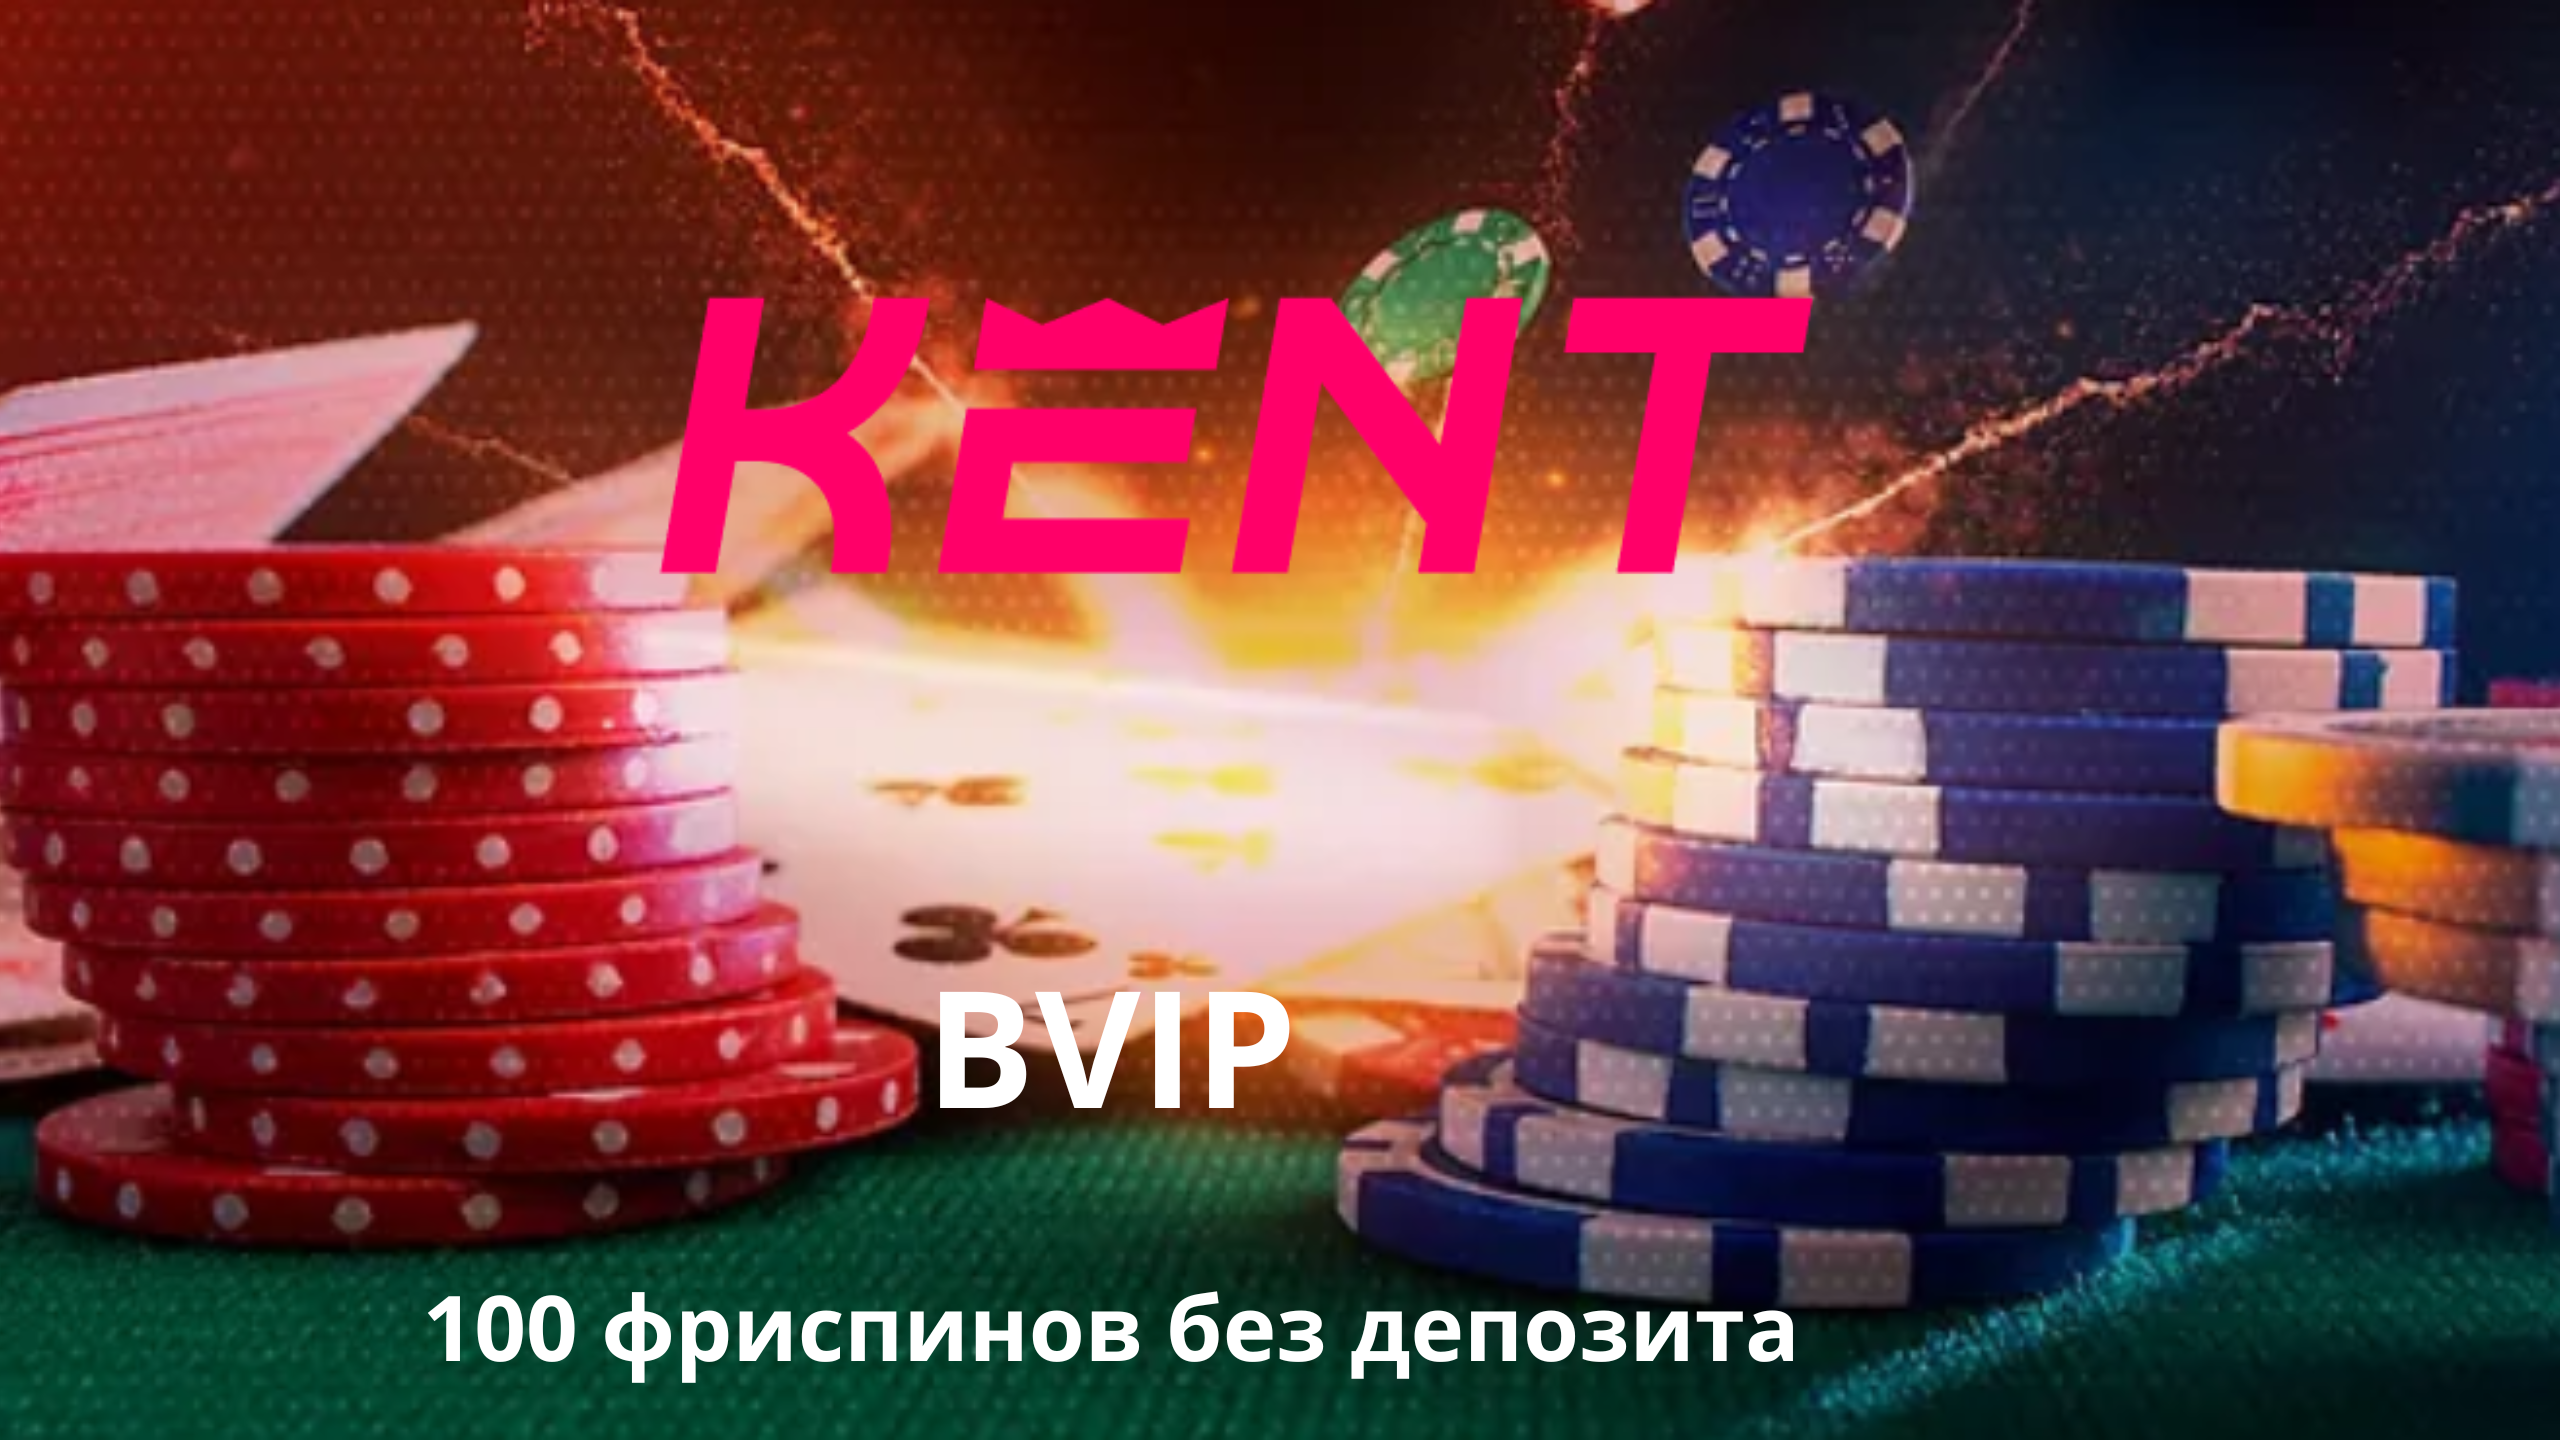 Kent casino вход kent casinos info